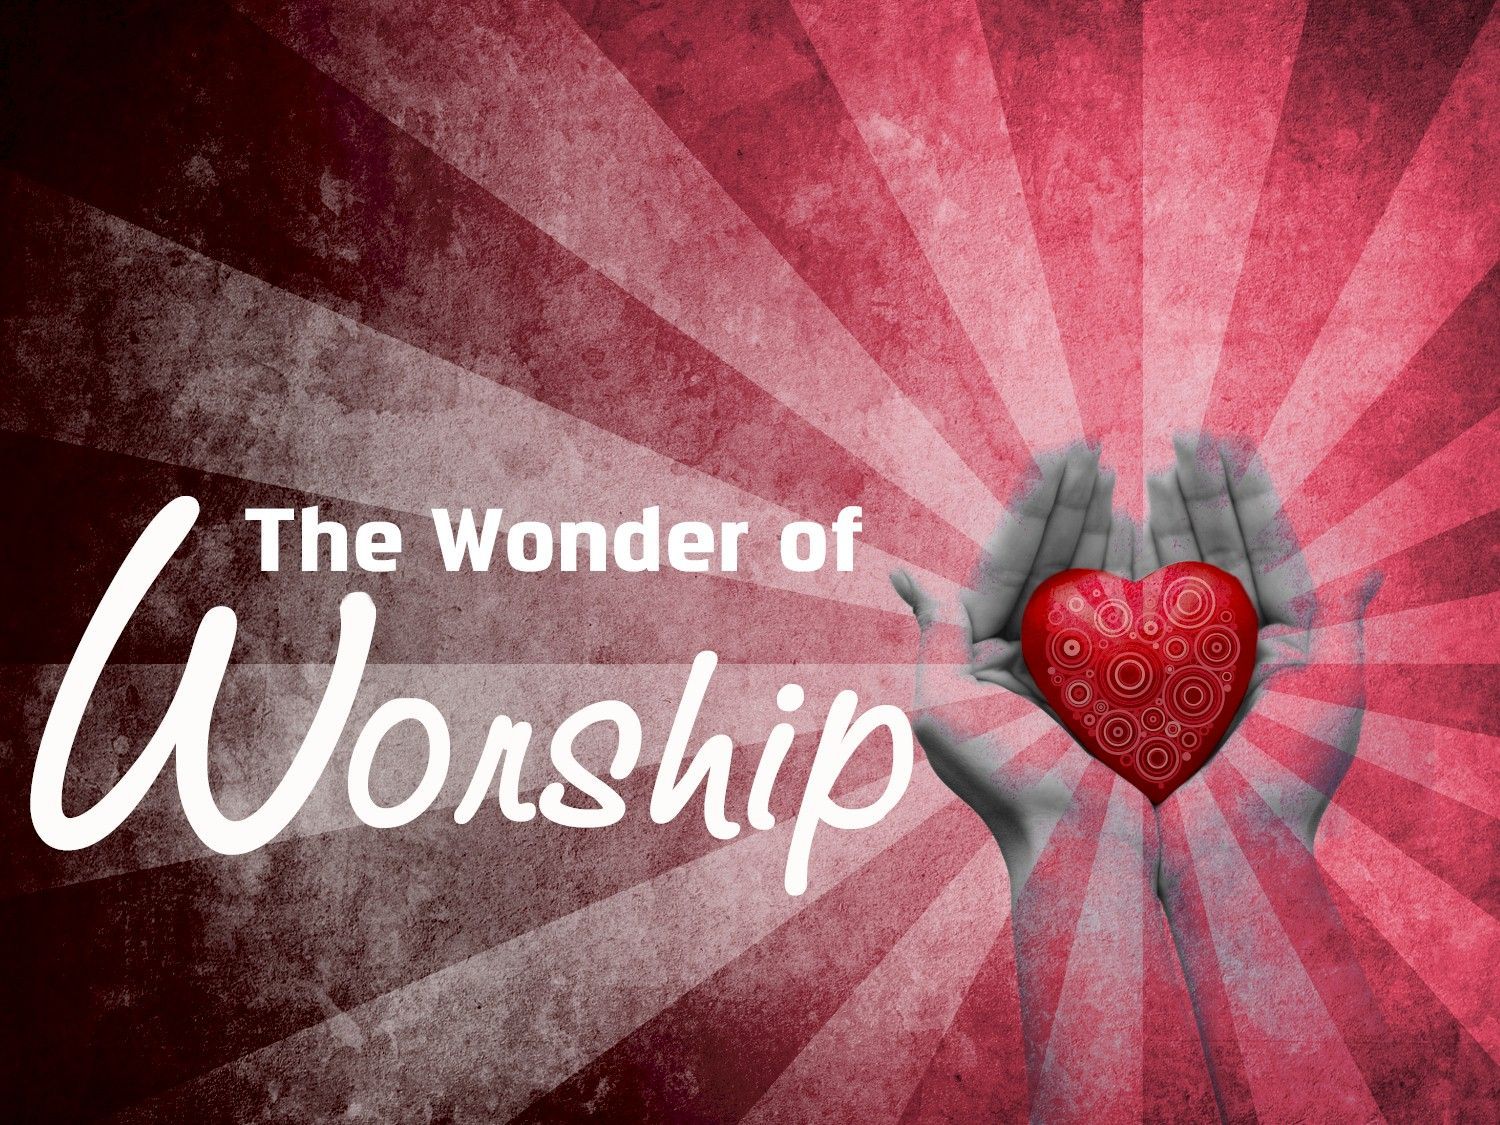 We worship you O Lord. Worship wallpaper, Worship the lord, Worship